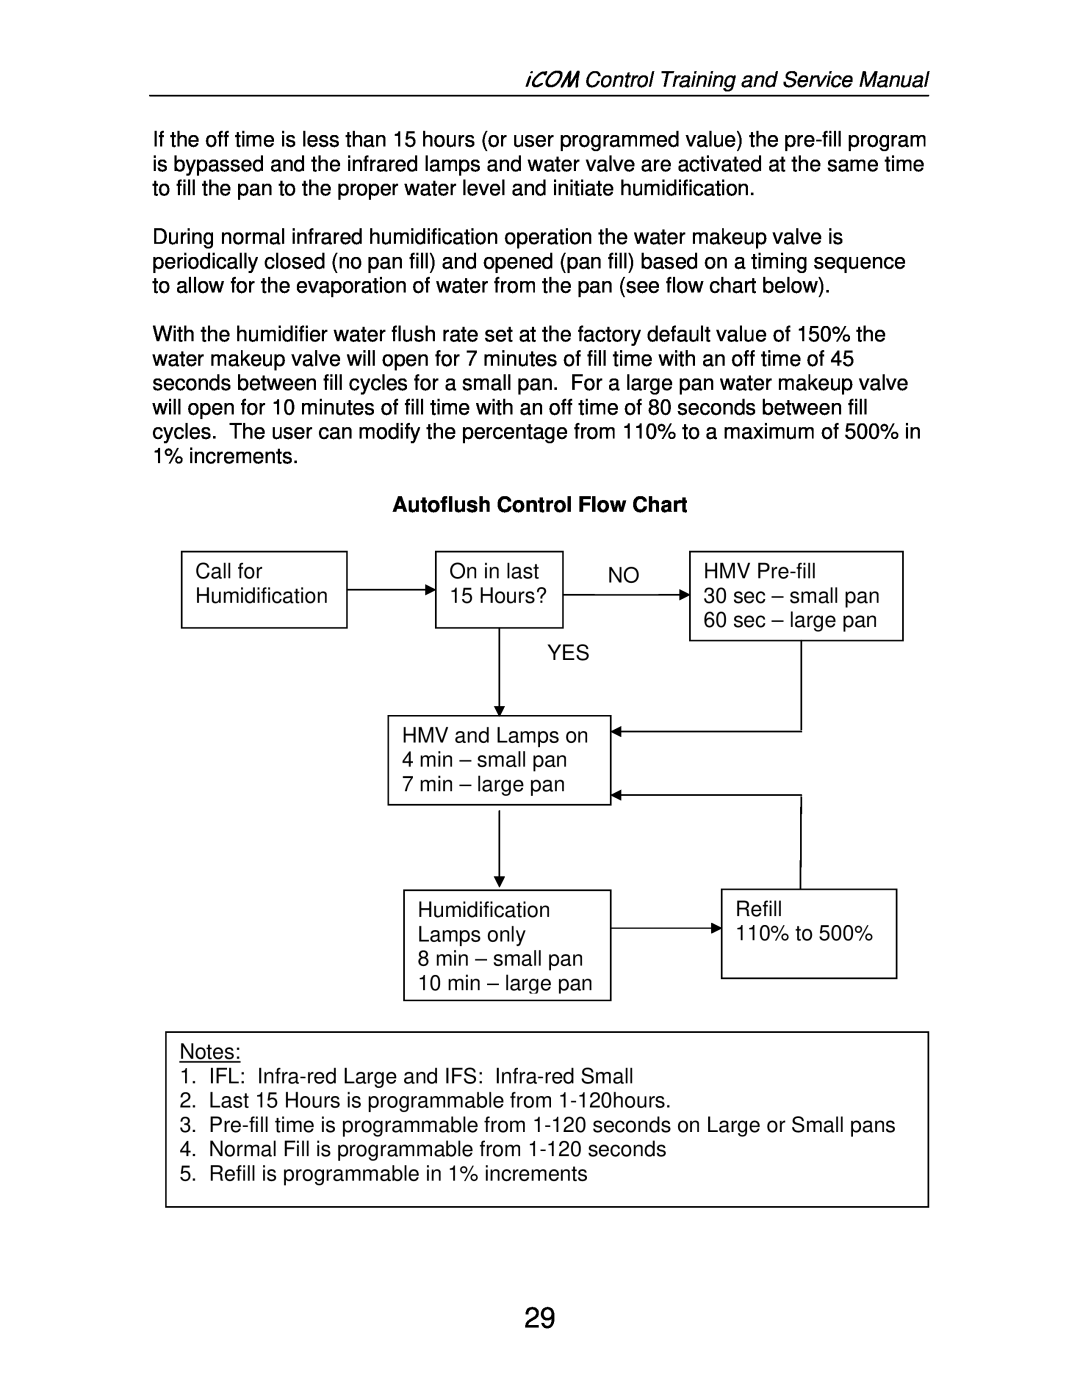 Liebert TM-10098 service manual iCOM Control Training and Service Manual, Autoflush Control Flow Chart 